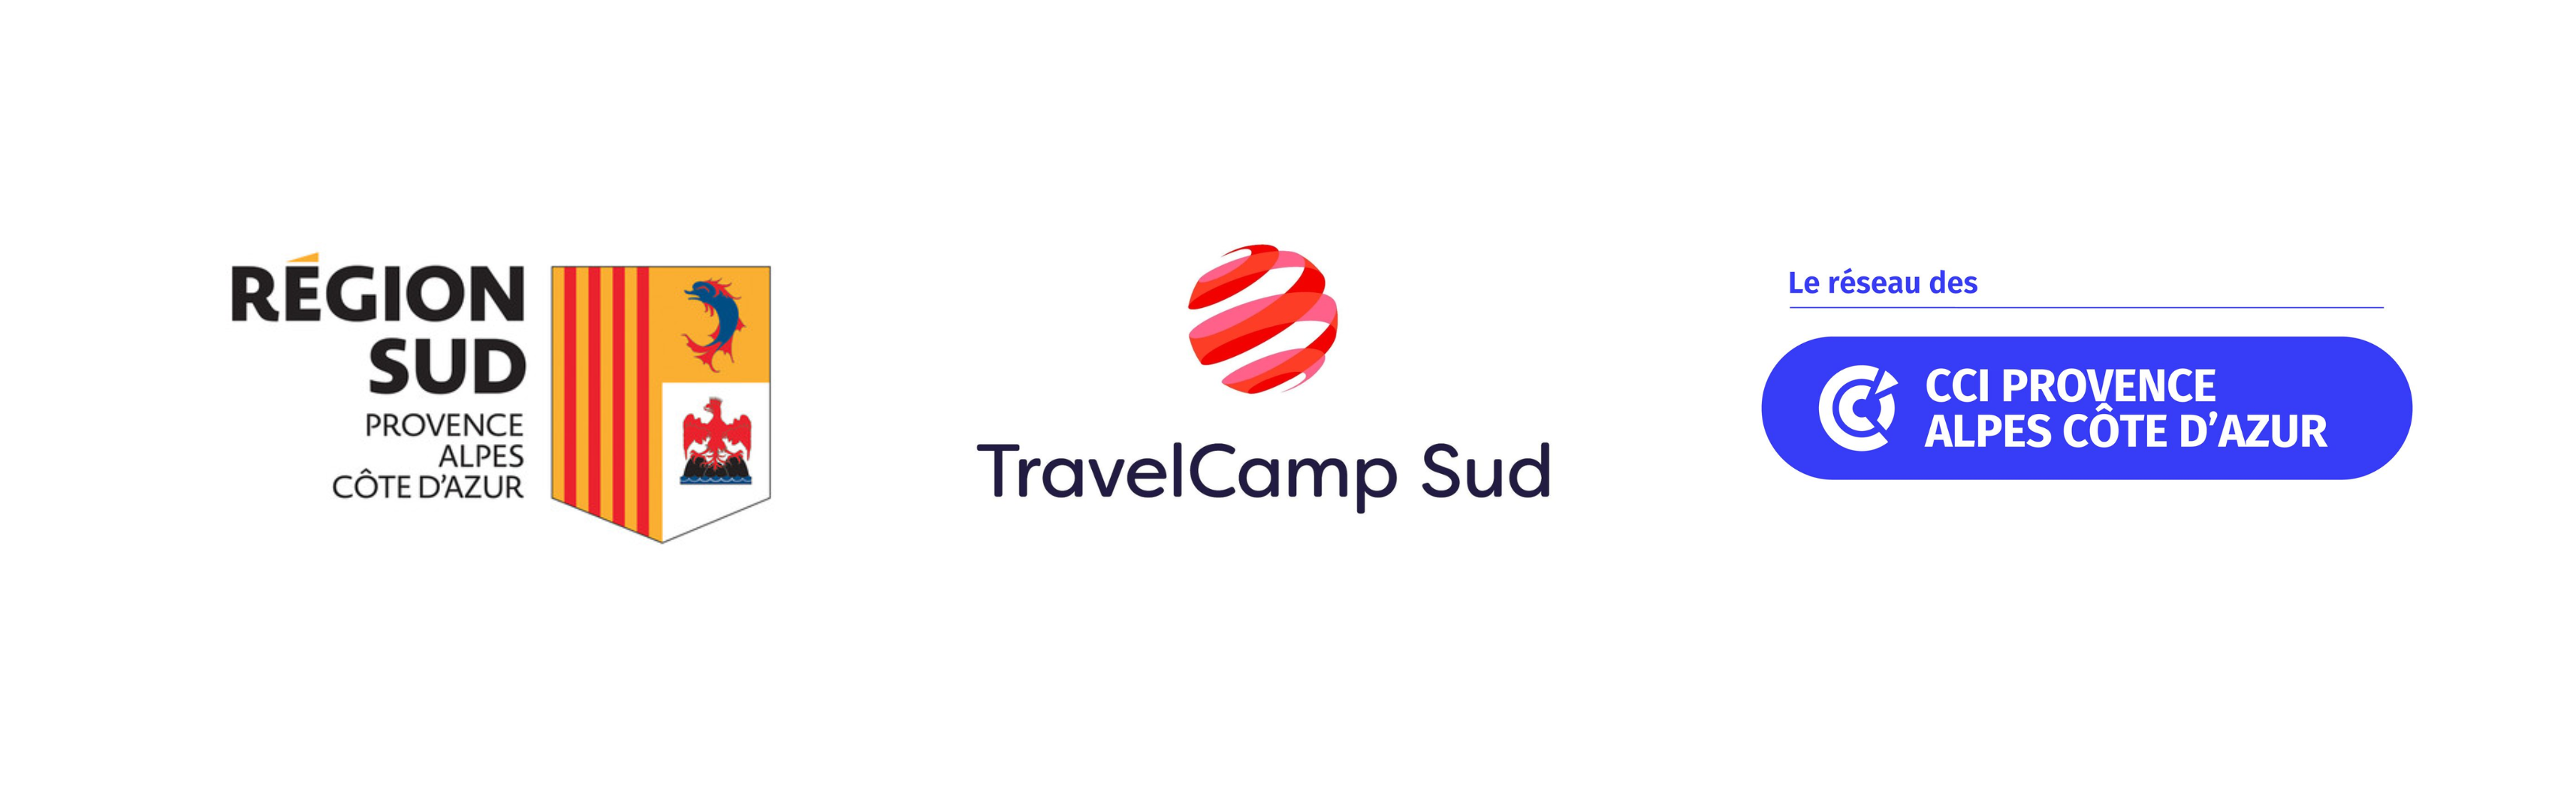 Travel Camp Sud 